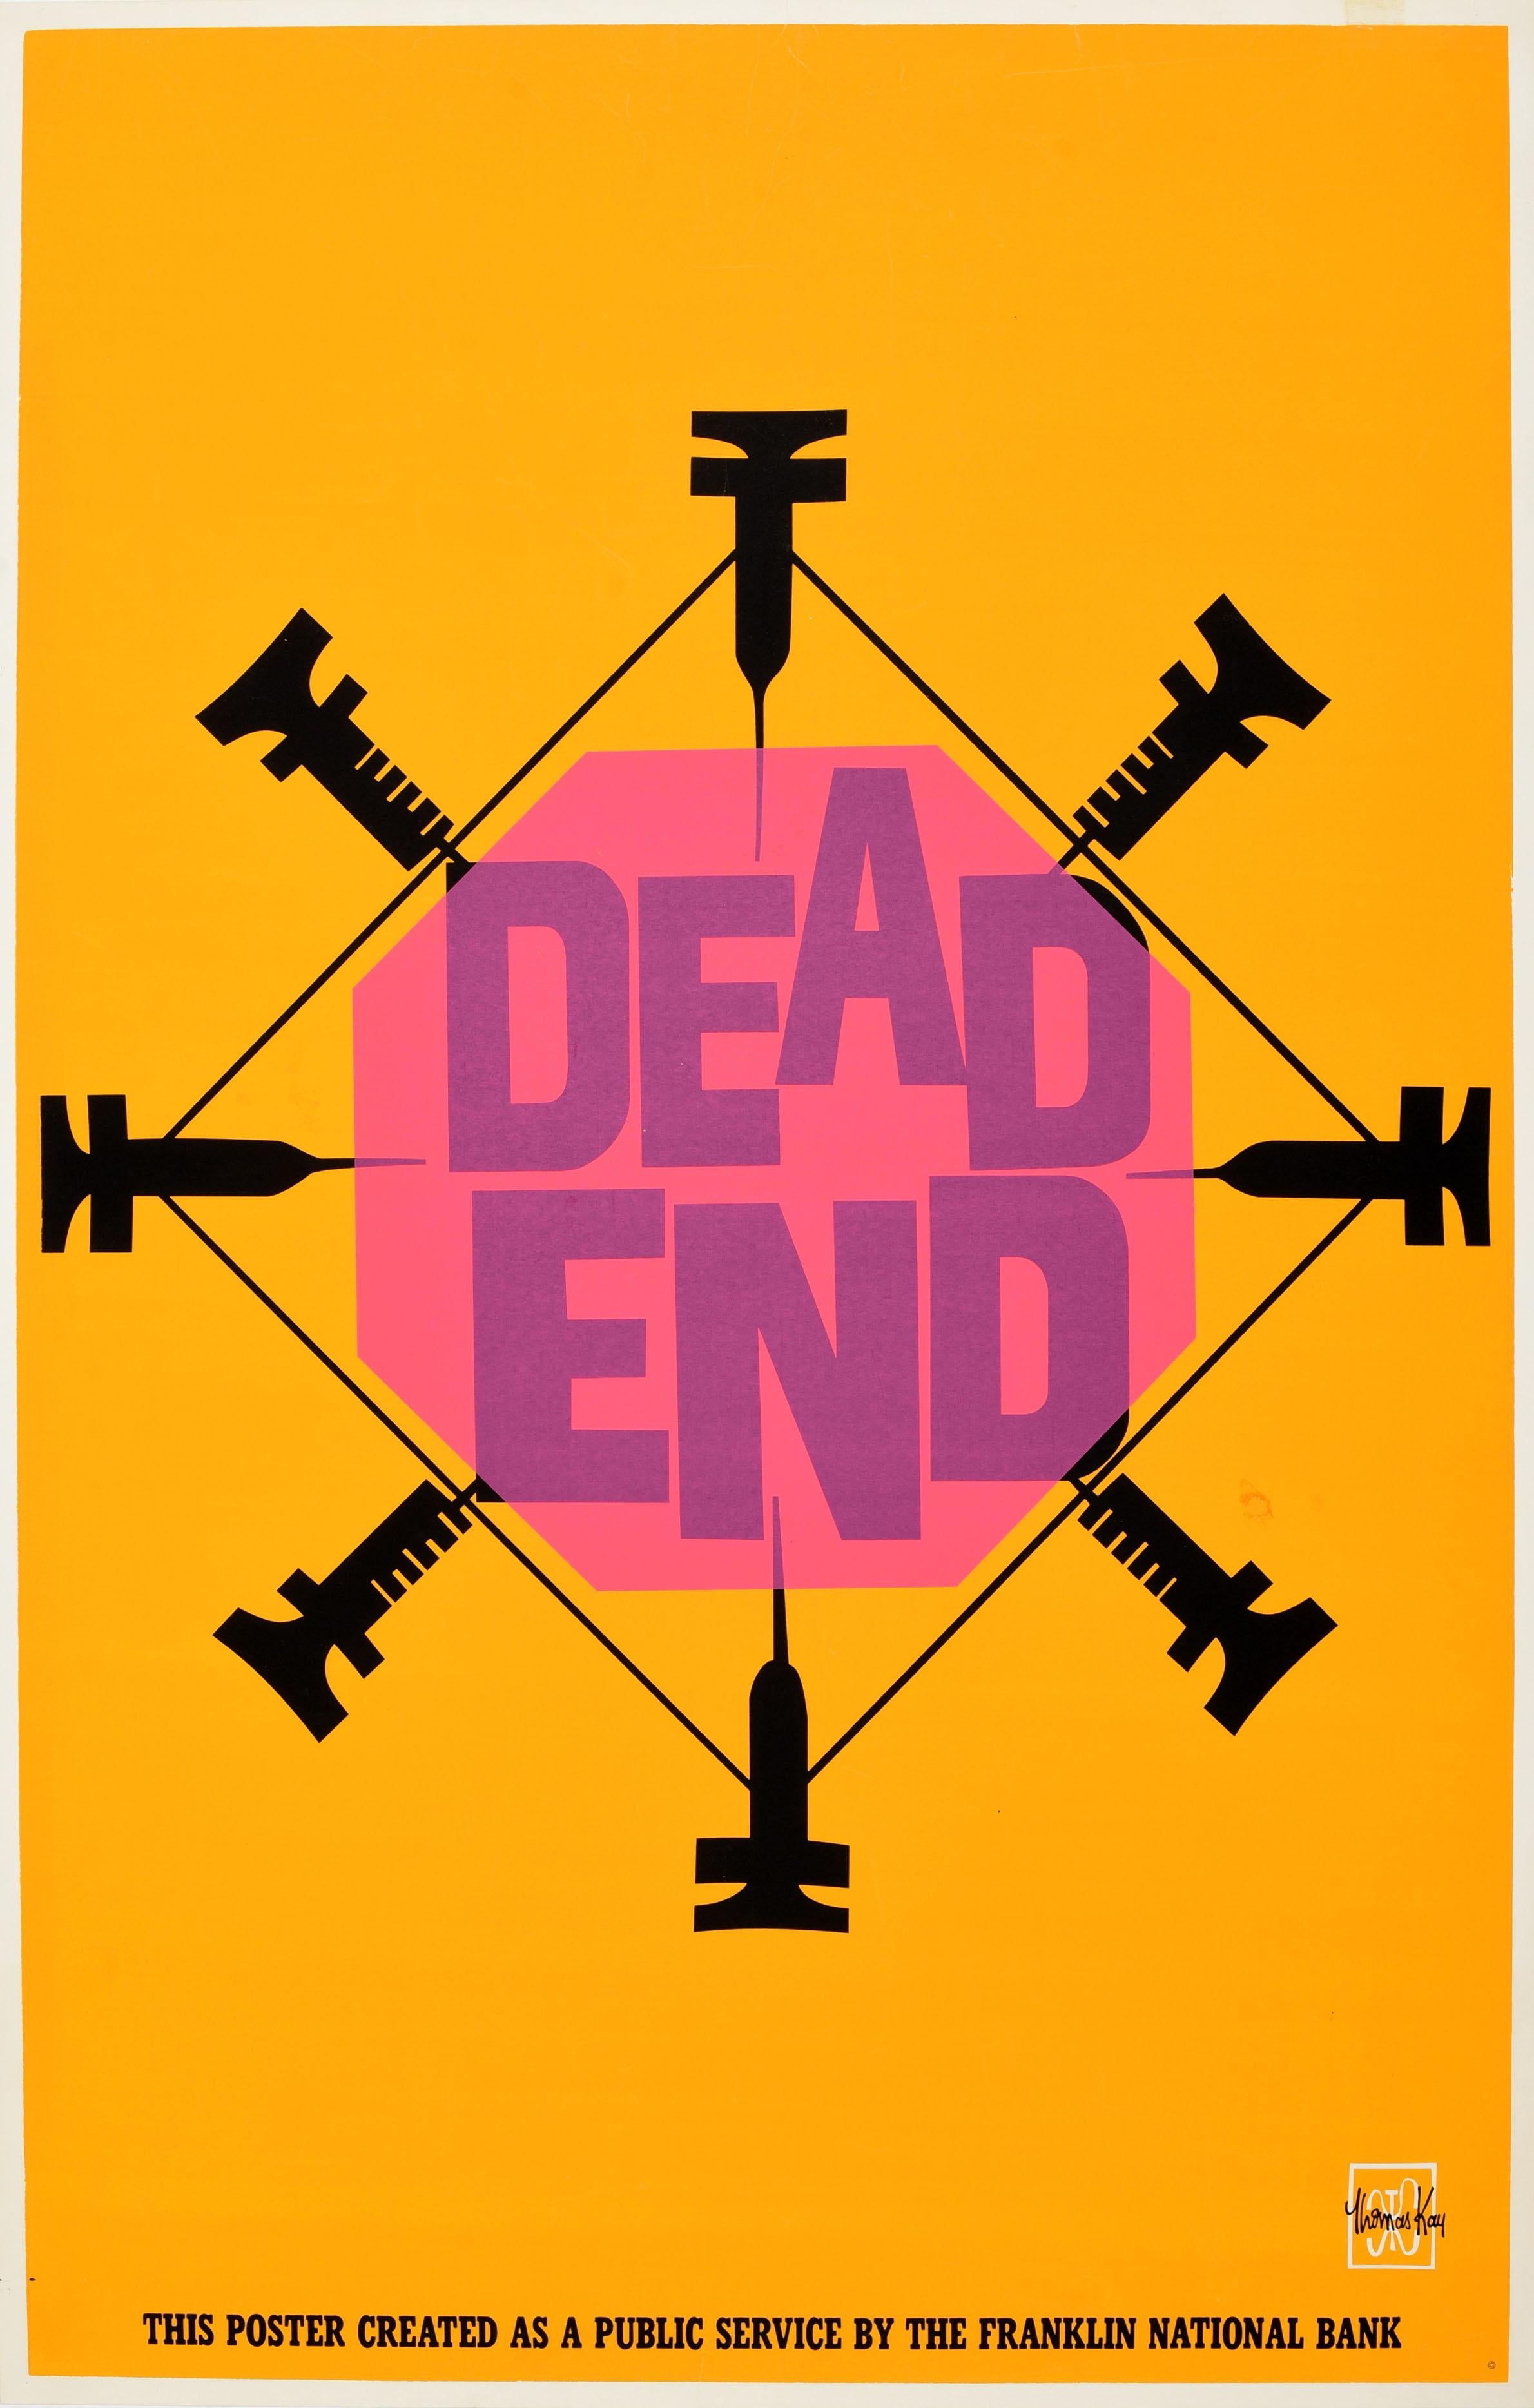 Thomas Kay Print - Original Vintage Poster Dead End Needles Drug Abuse Public Health Graphic Design